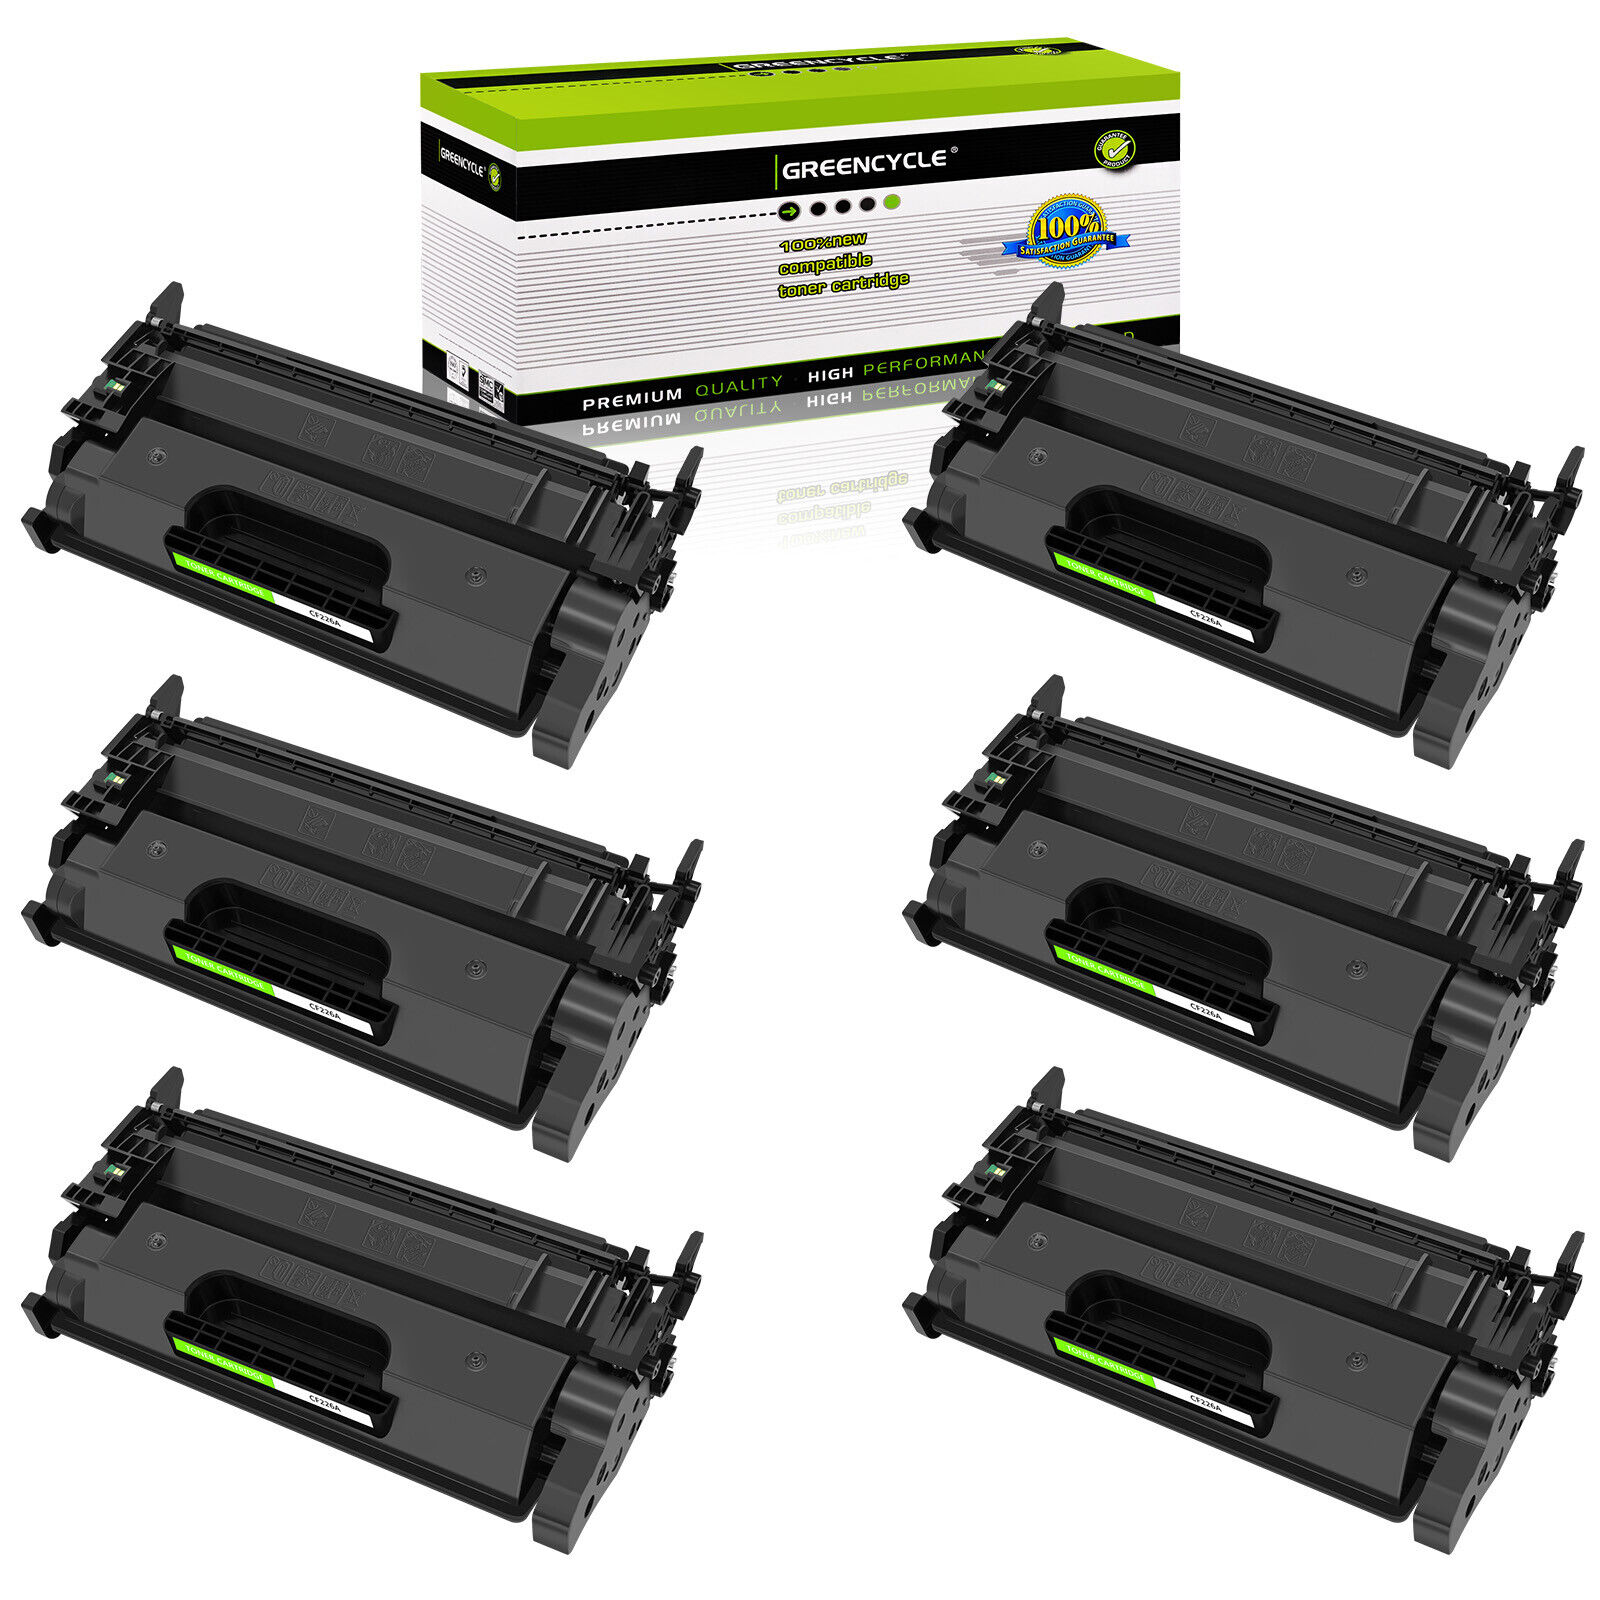 6PK Fit for HP CF226A 26A Toner LaserJet Pro M402 M402dne MFP M426 M426dw Print